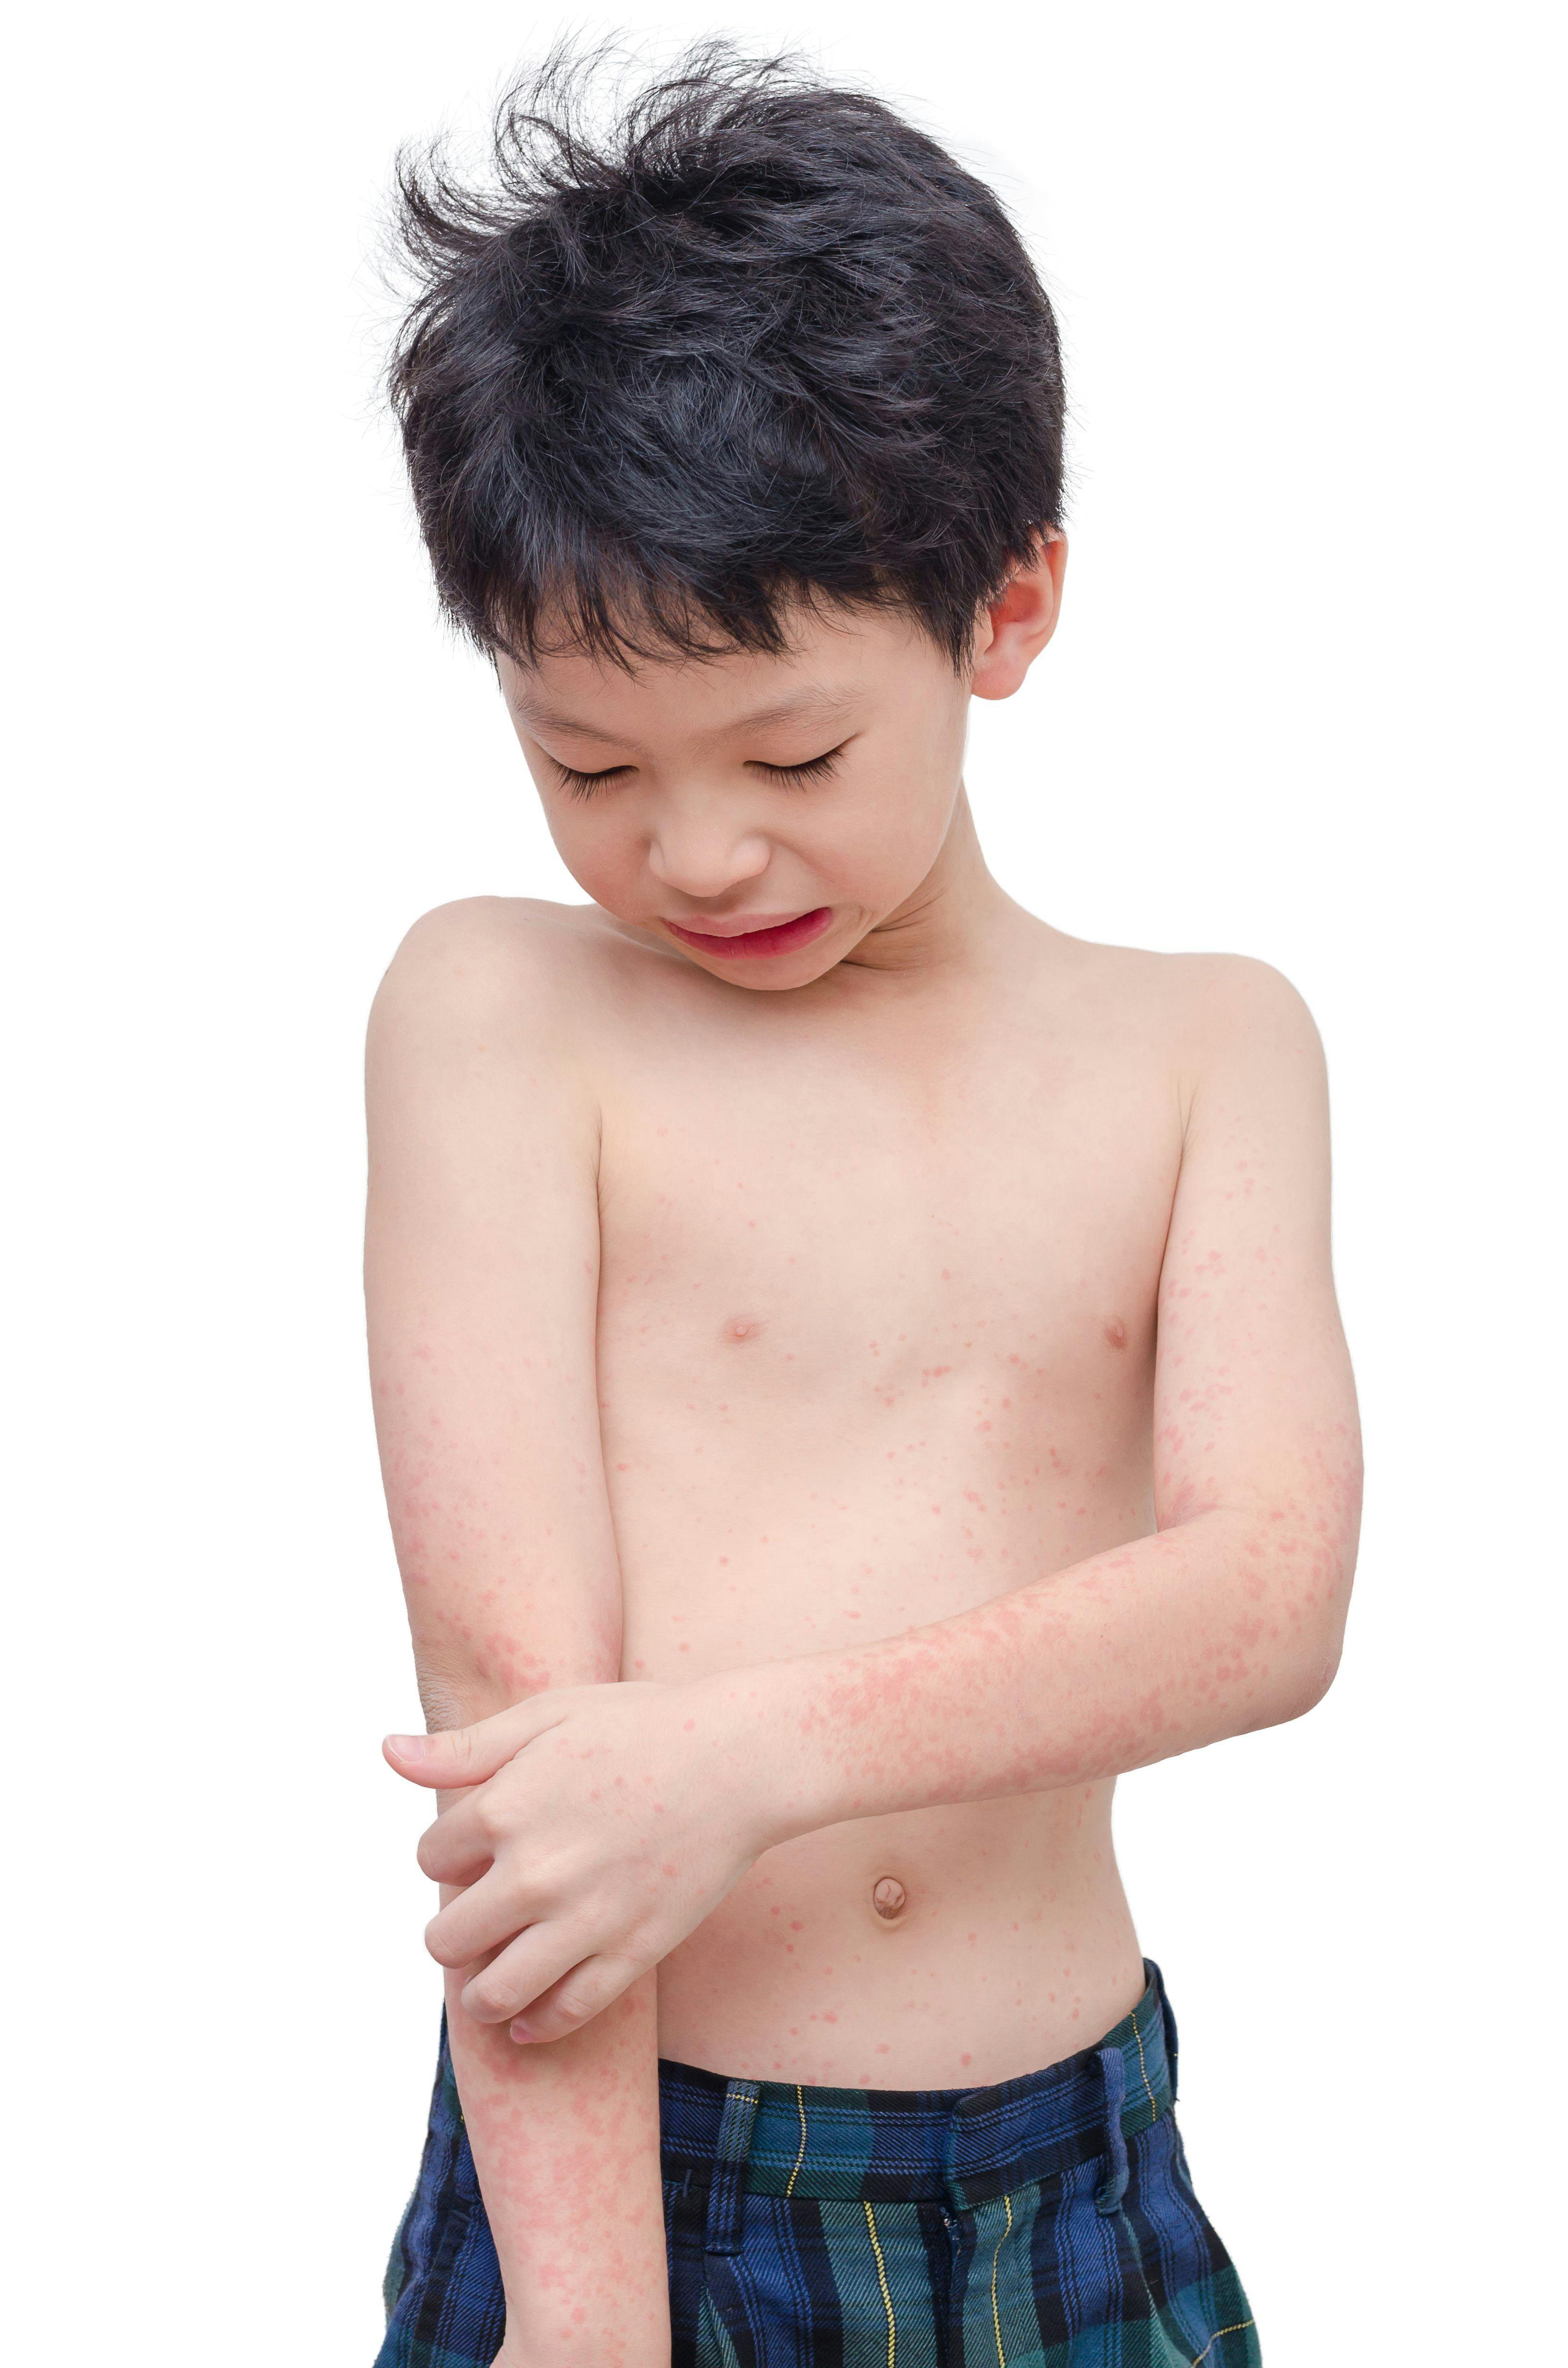 Severity of Atopic Dermatitis Increases Disease Burden